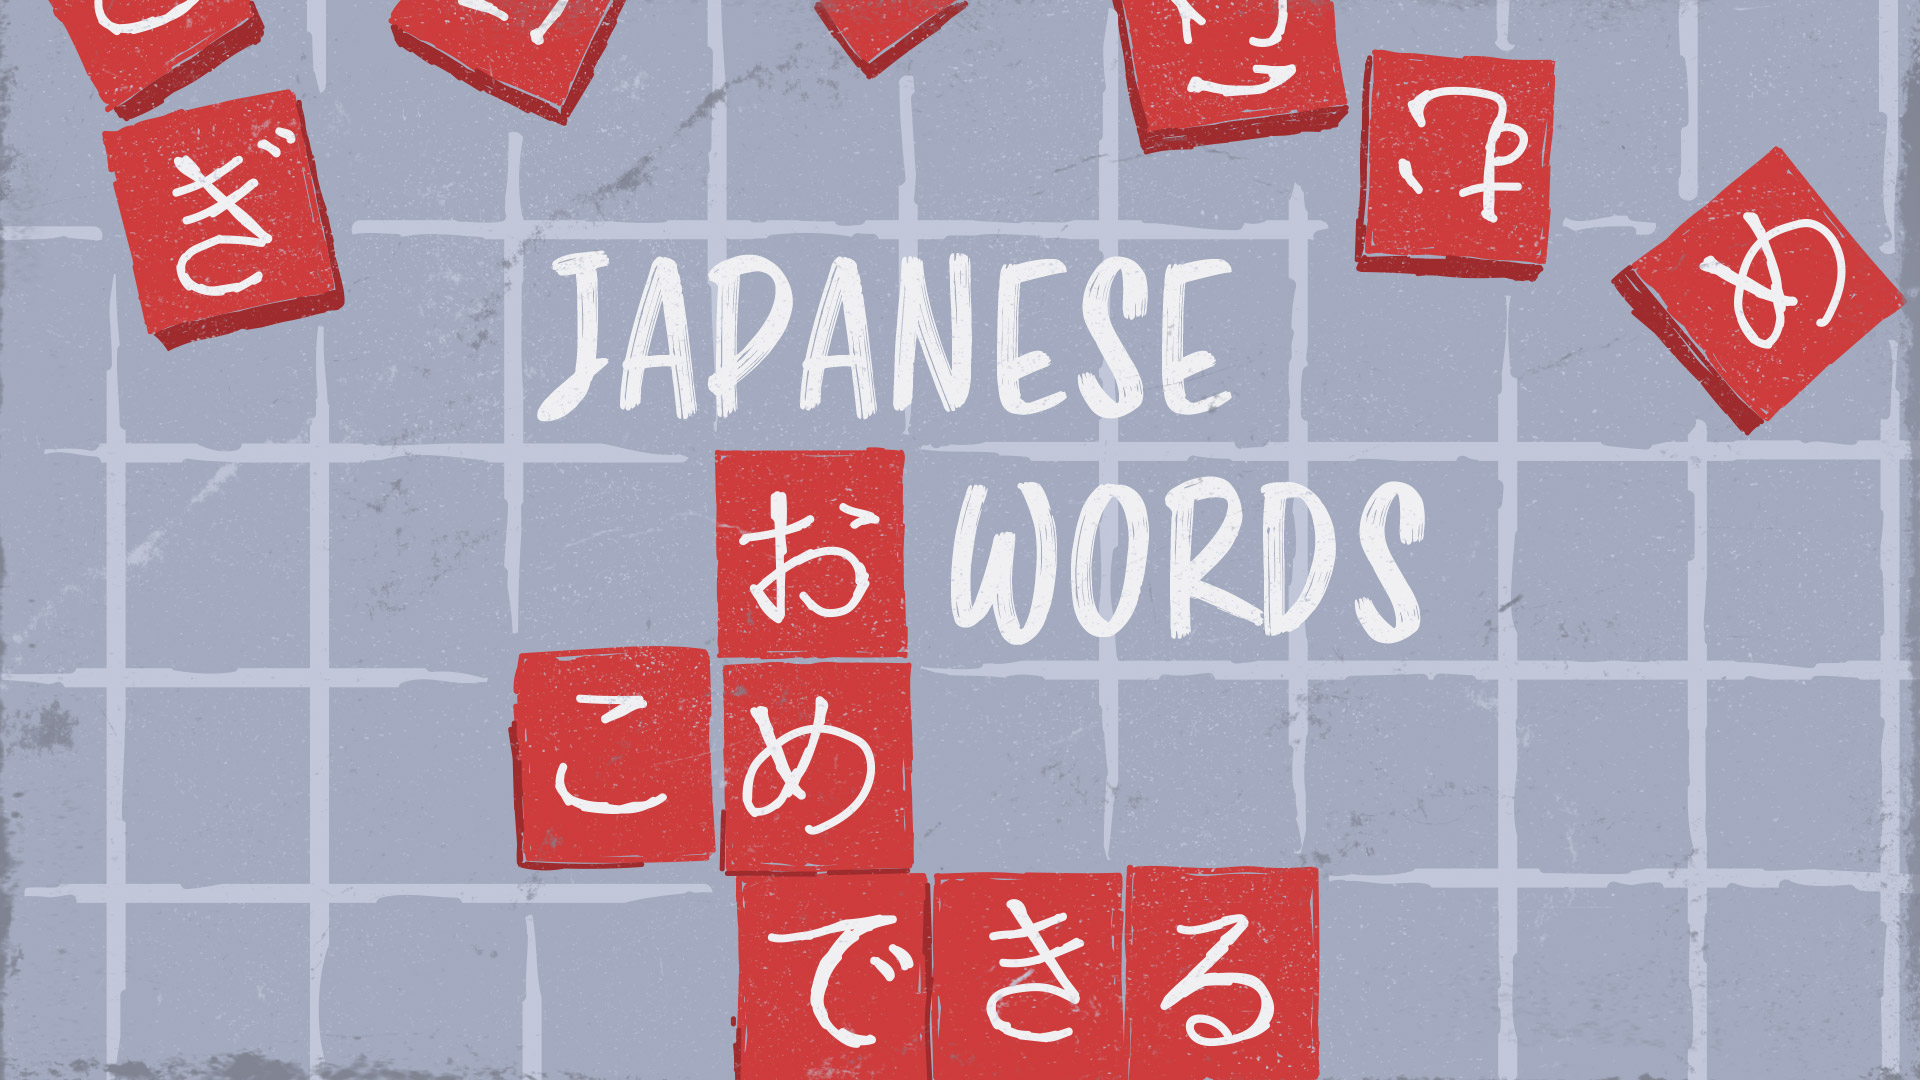 Yabai - やばい - Useful Japanese Words | Sticker